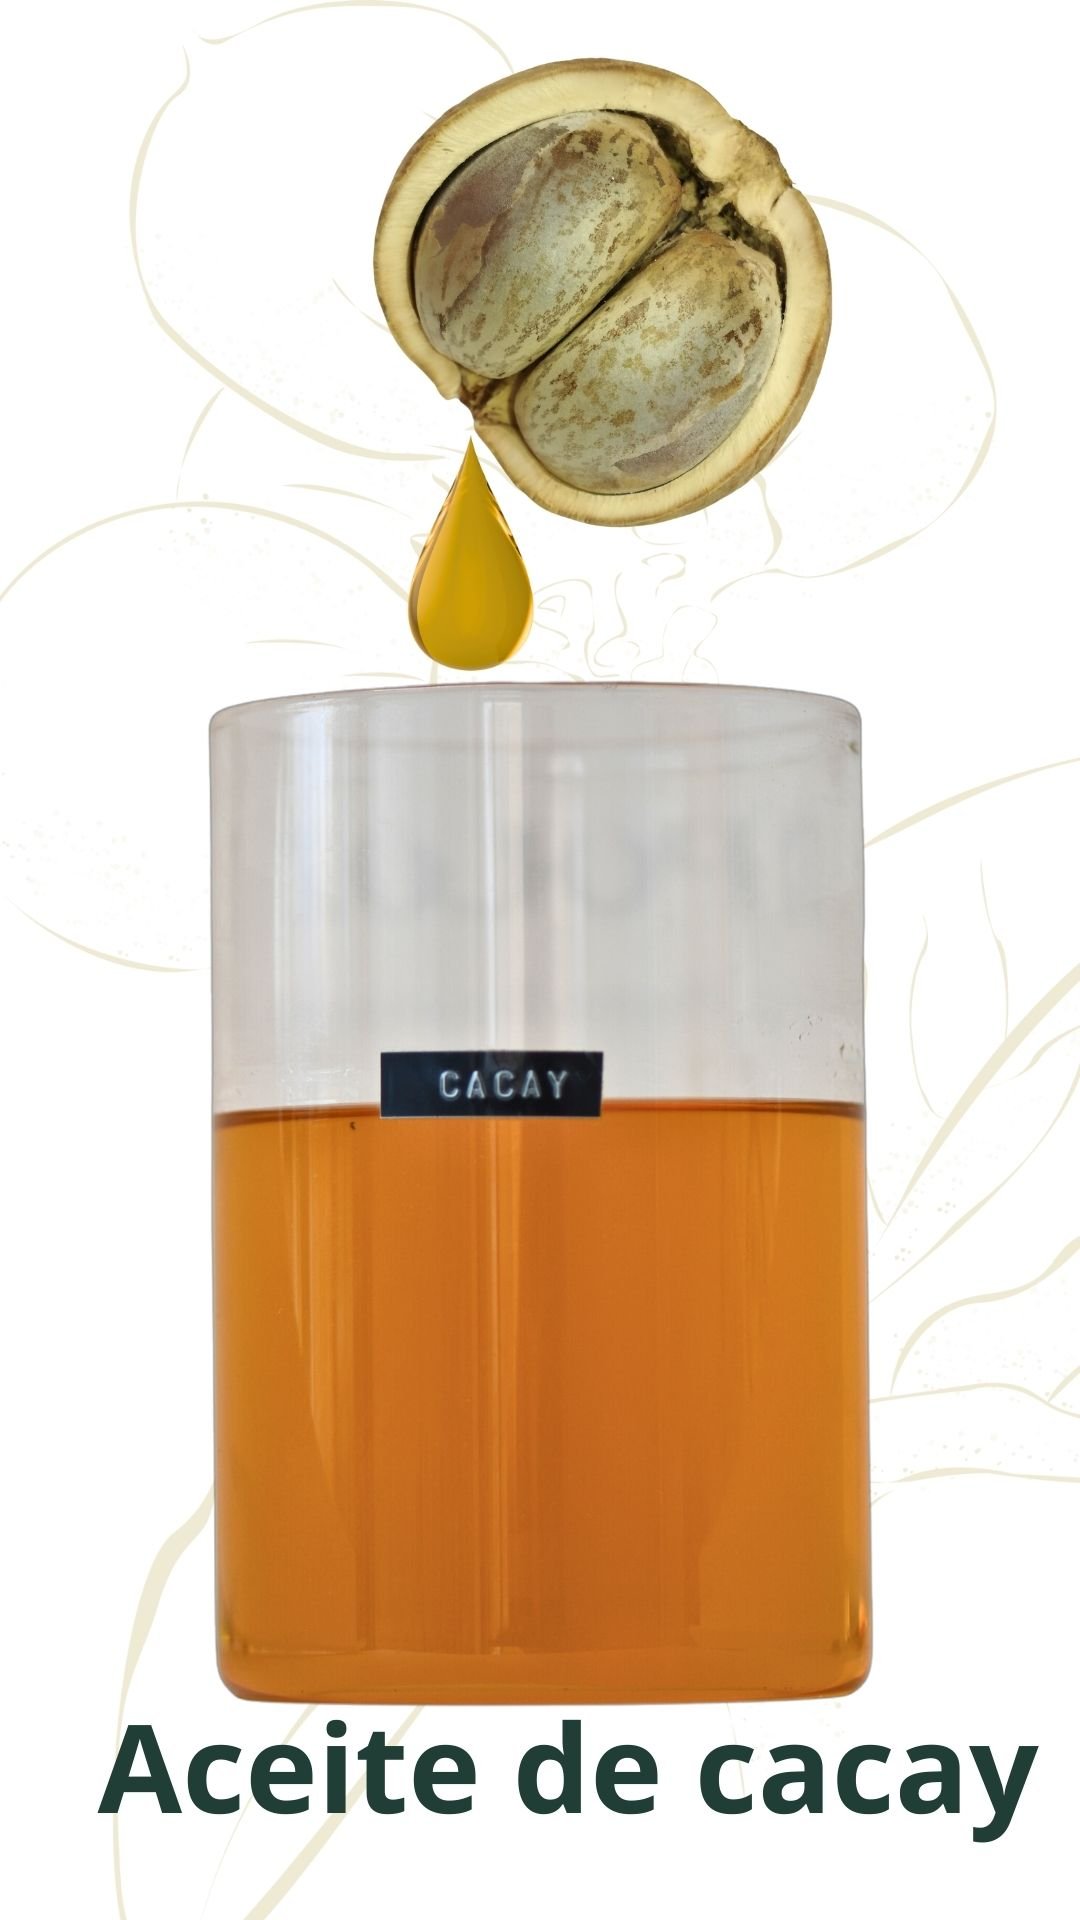 Cacay oil - ingrediente natural